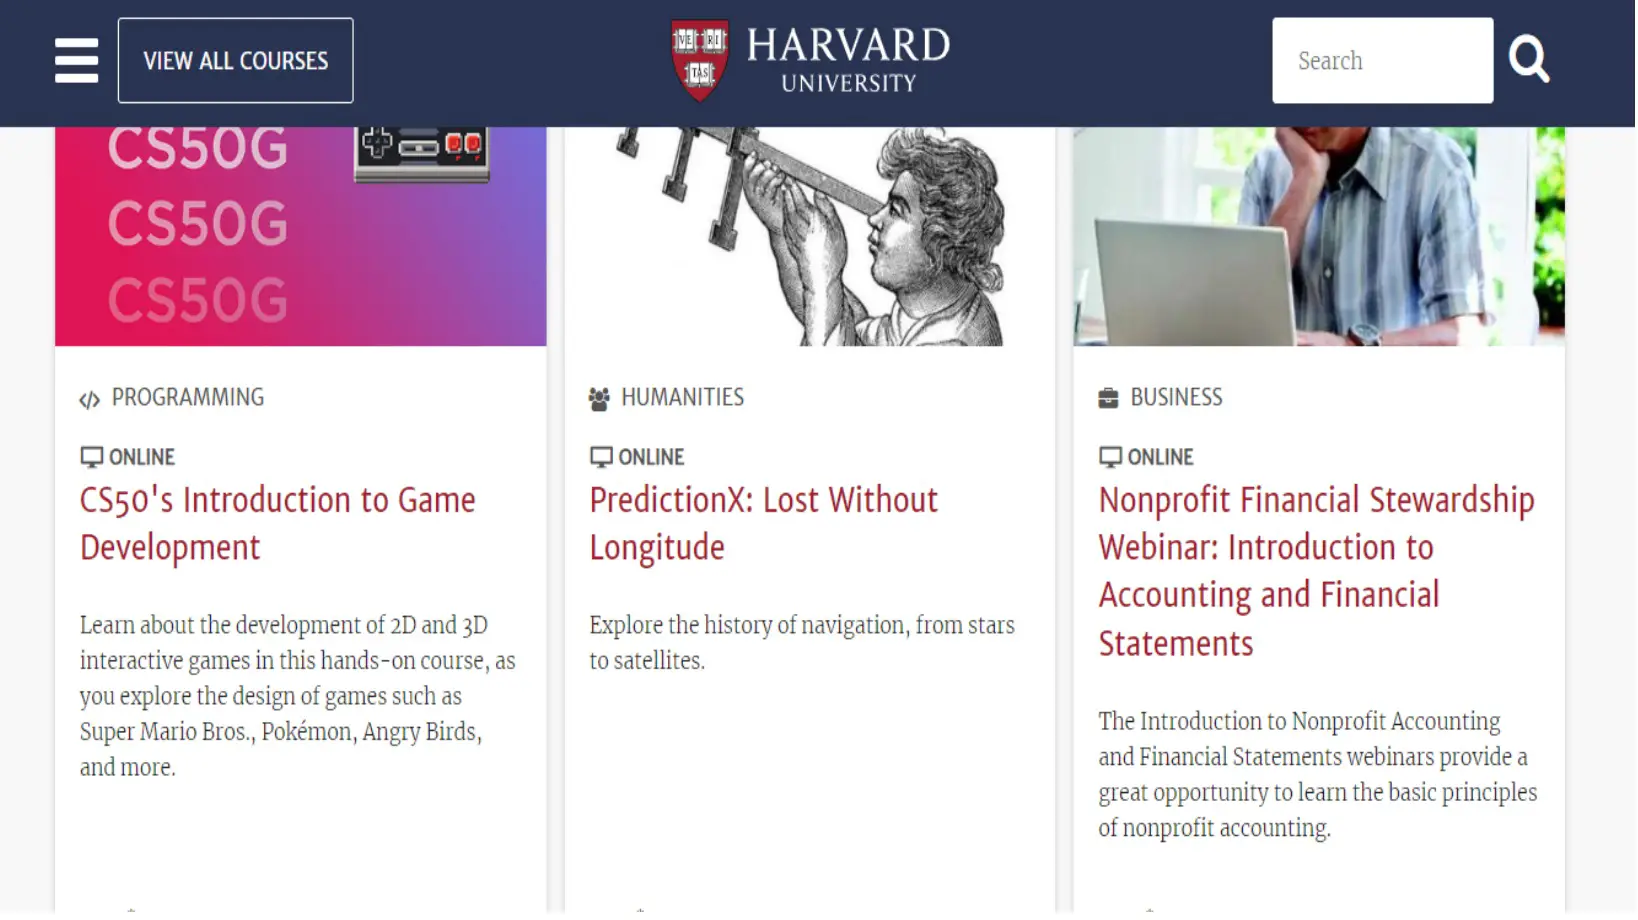 Free online courses offered by Harvard University. Photo: Harvard University